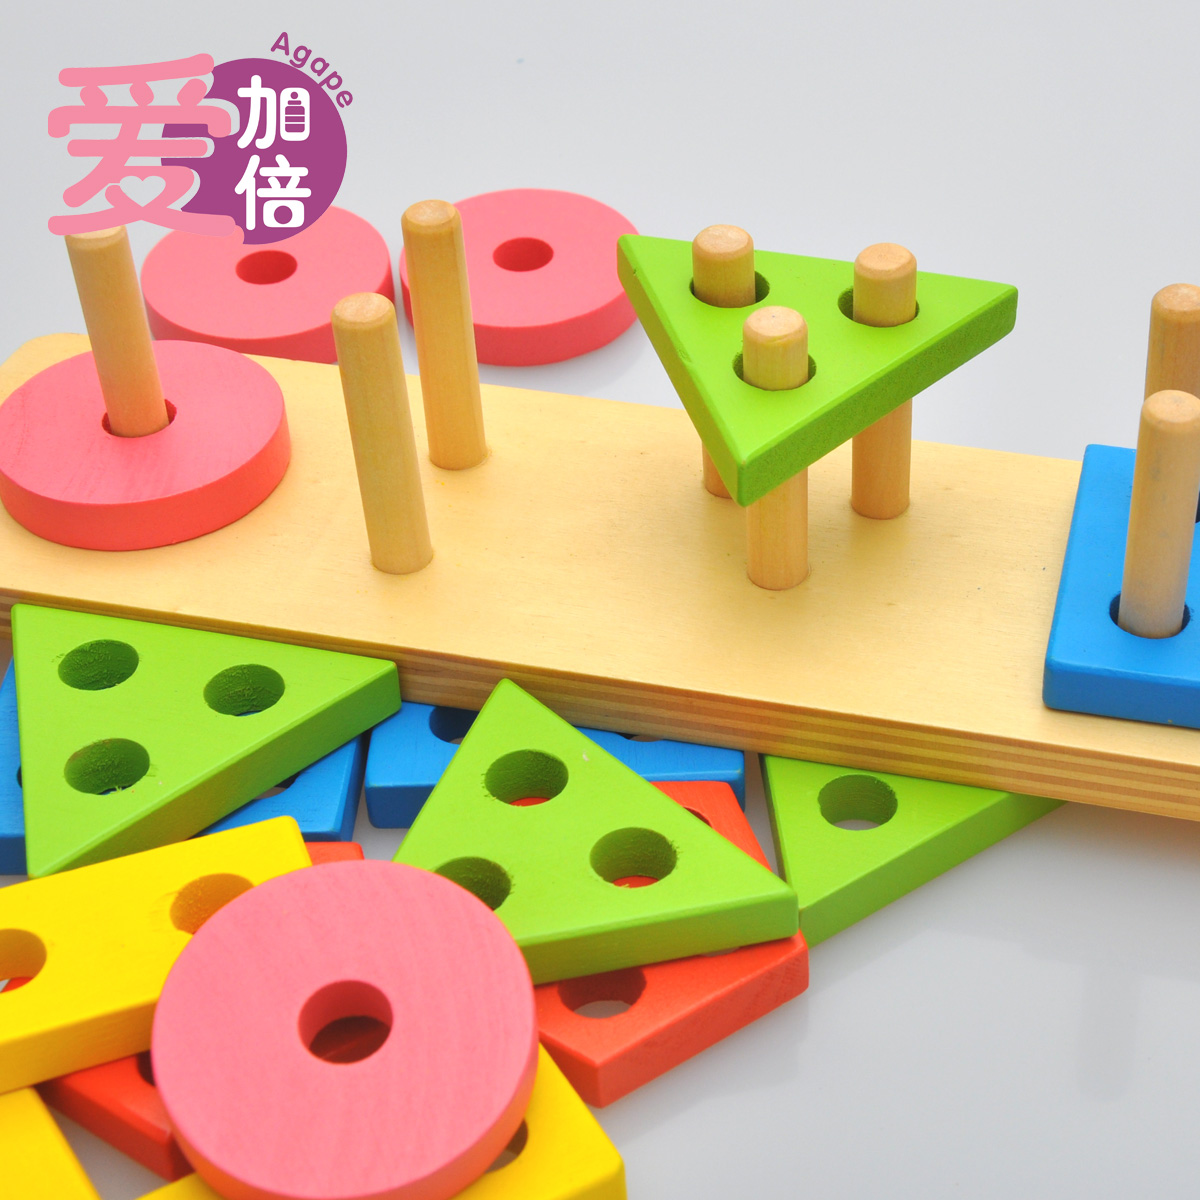 Digital Cards Circular Fraction Board MonkeyJack Montessori Mathematics Materials Wooden Intelligence Development Toy